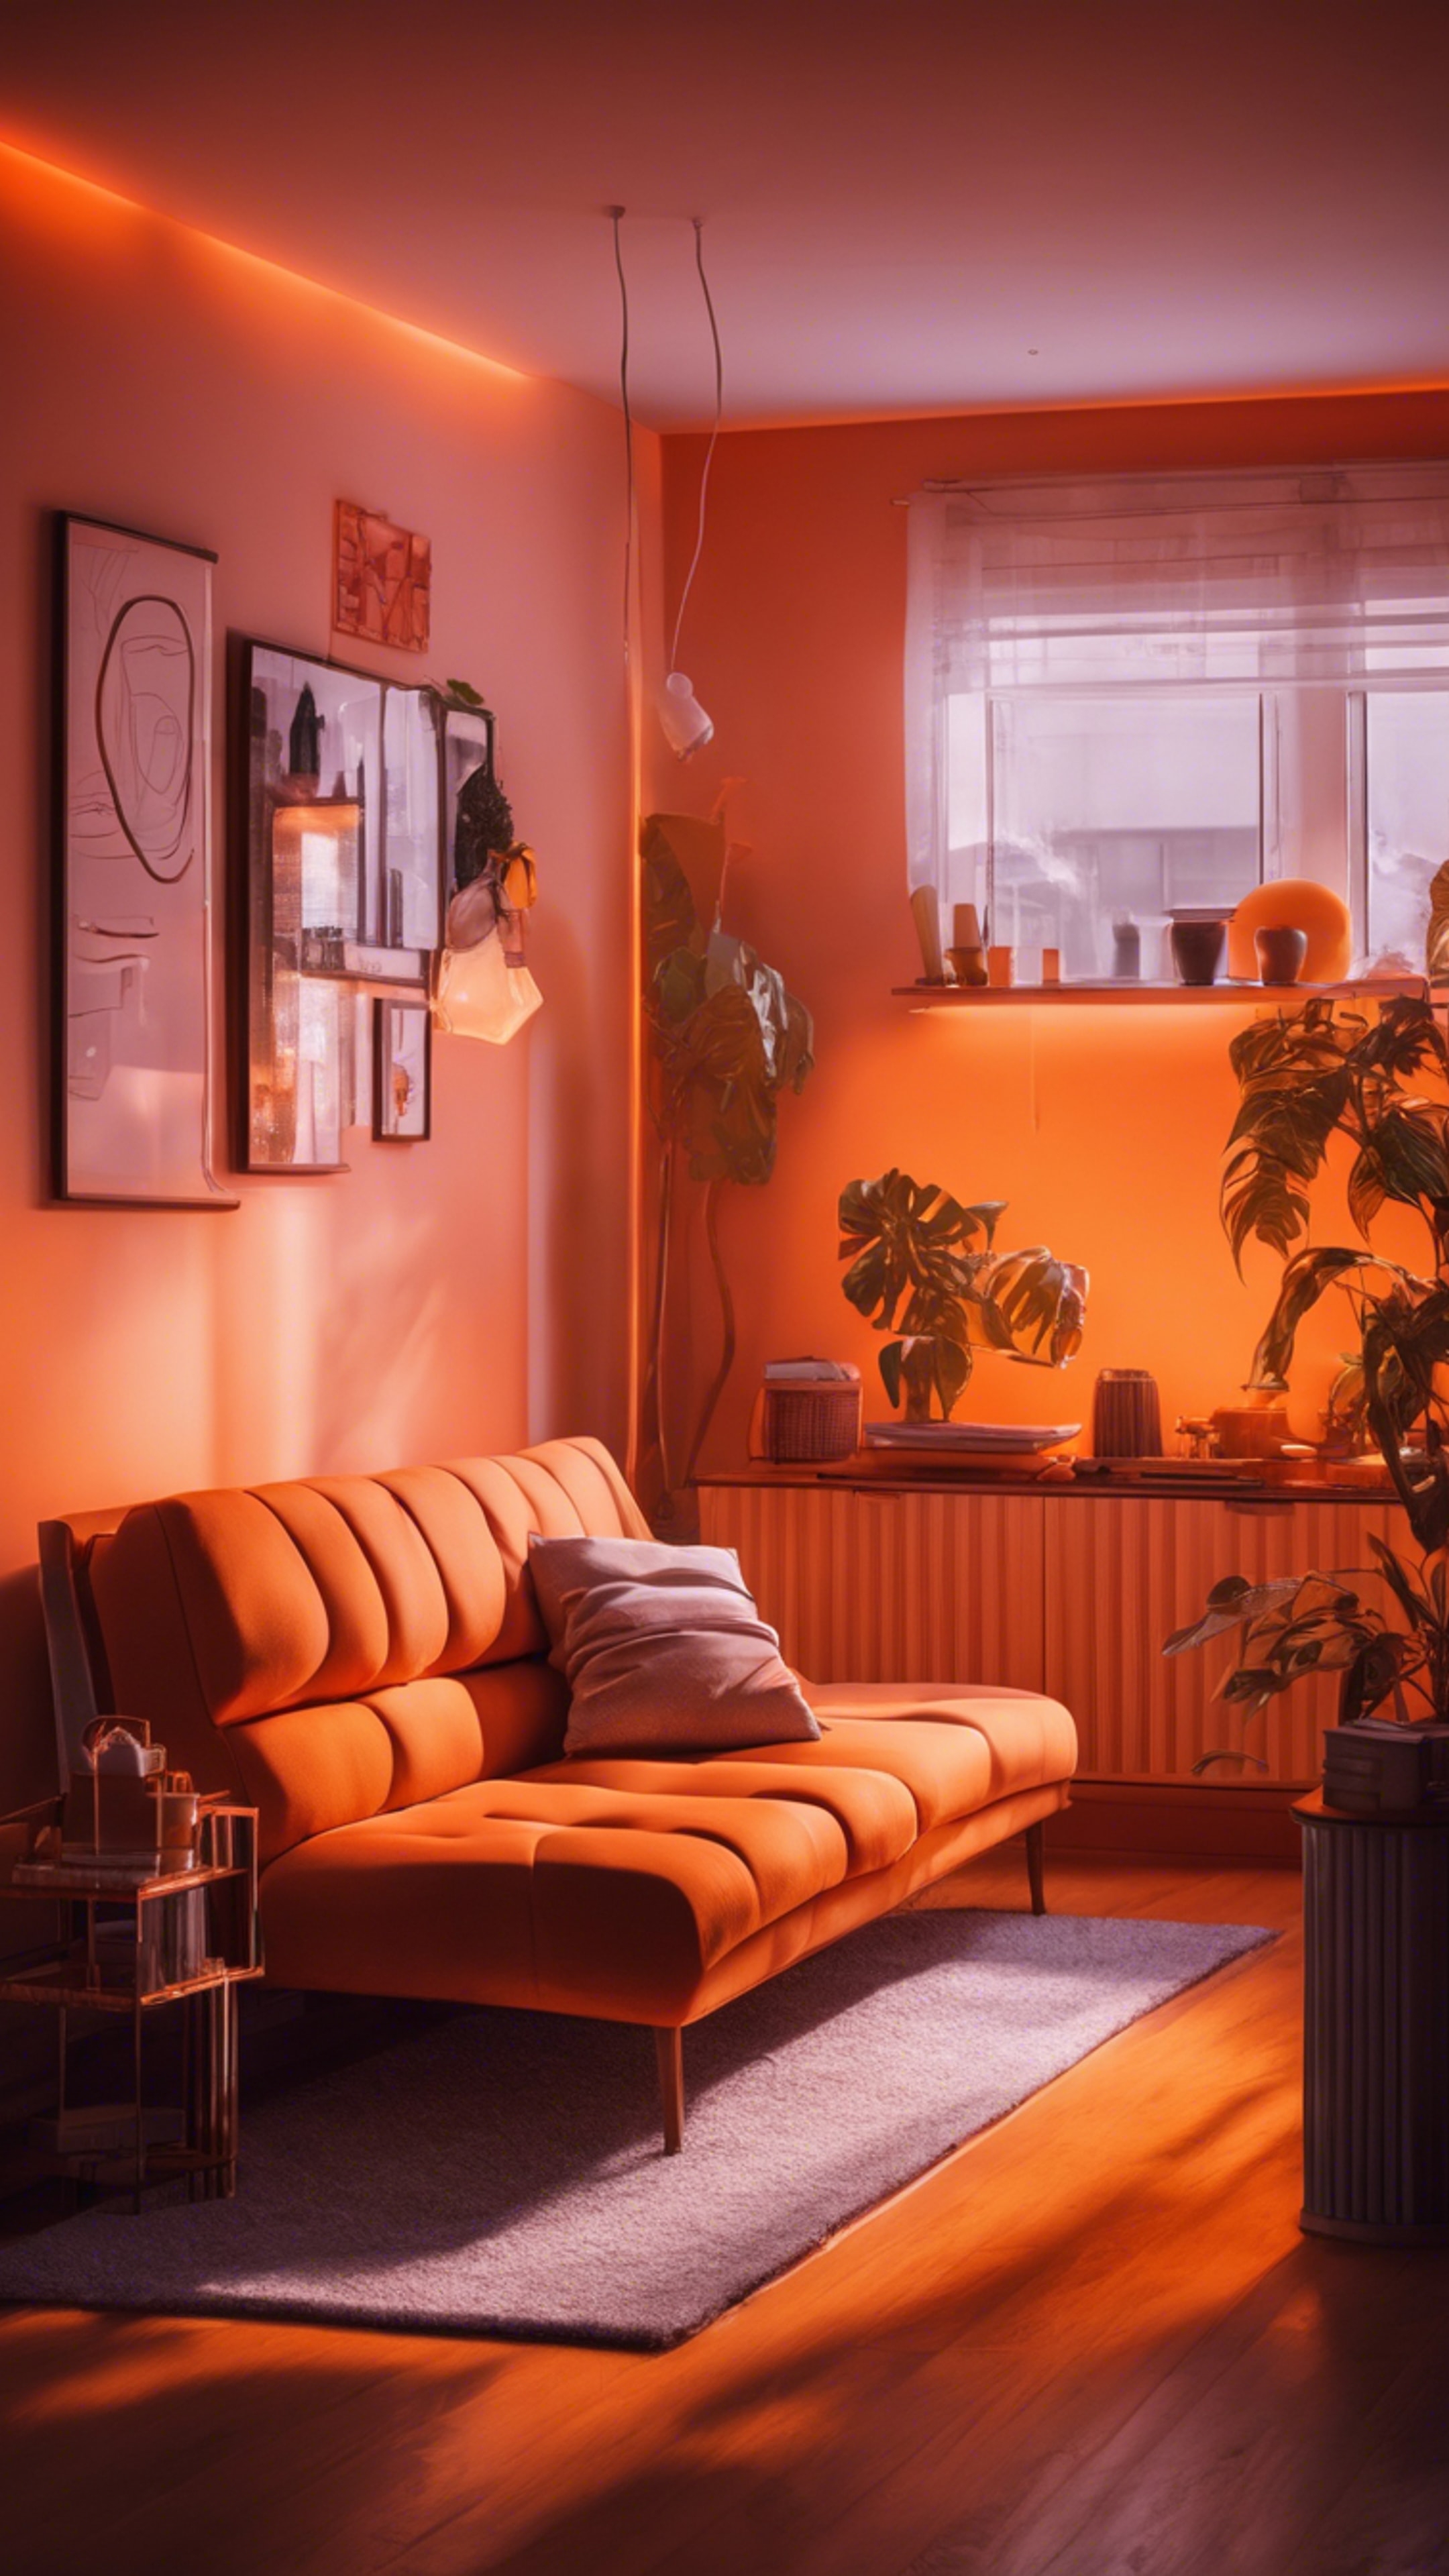 A fresh orange living room with trendy neon lights casting beautiful shadows. Divar kağızı[39213640e9864c1aa0c4]